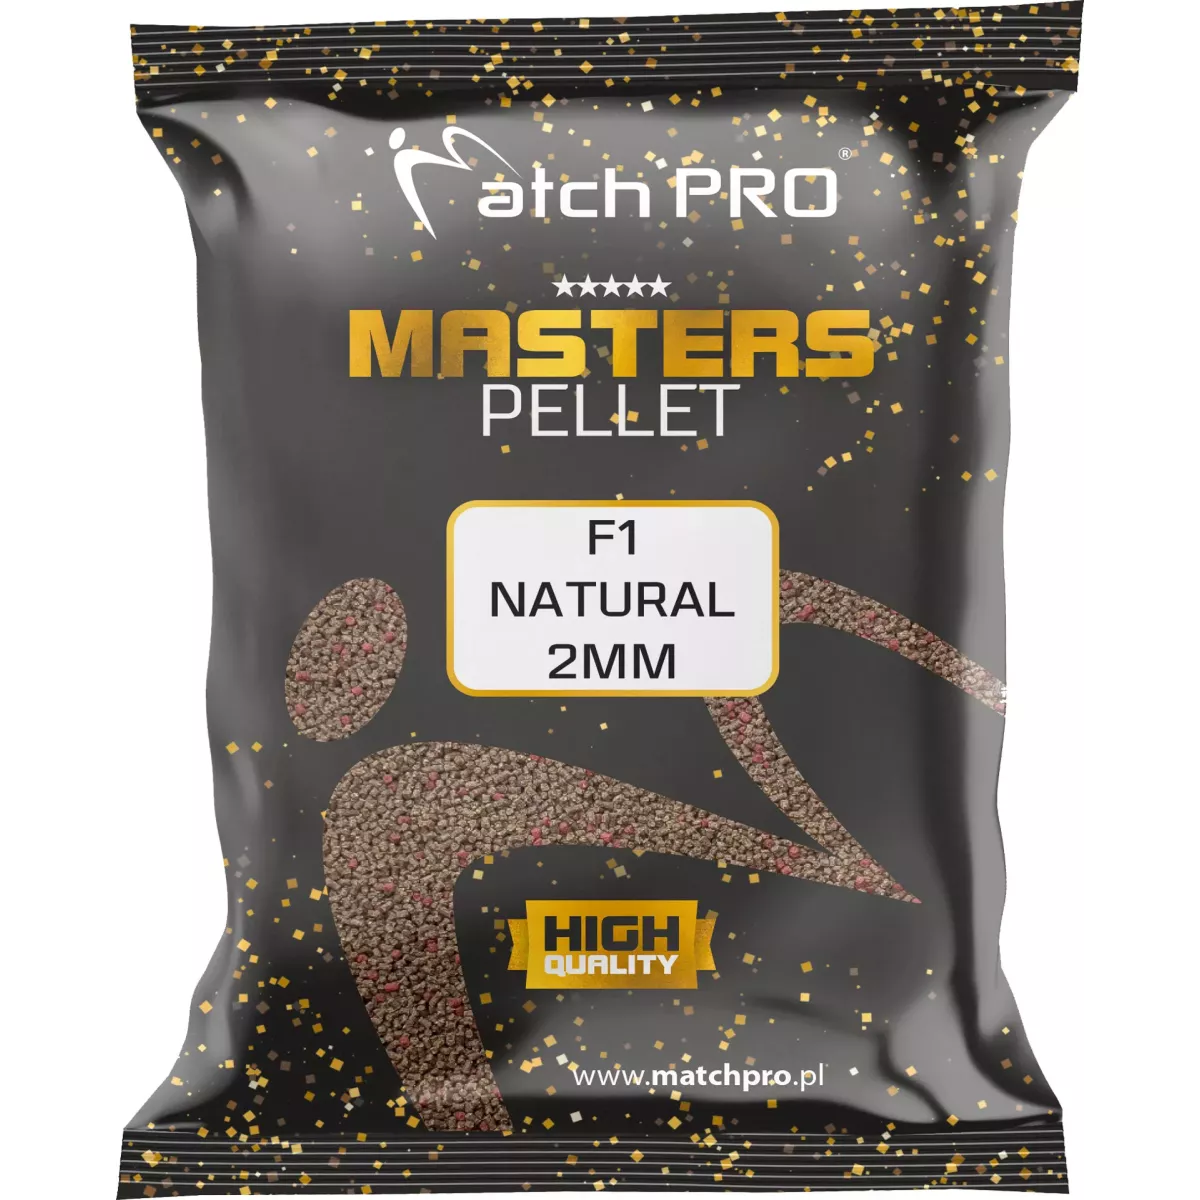 Pellet MatchPro Masters 2mm - F1 NATURAL